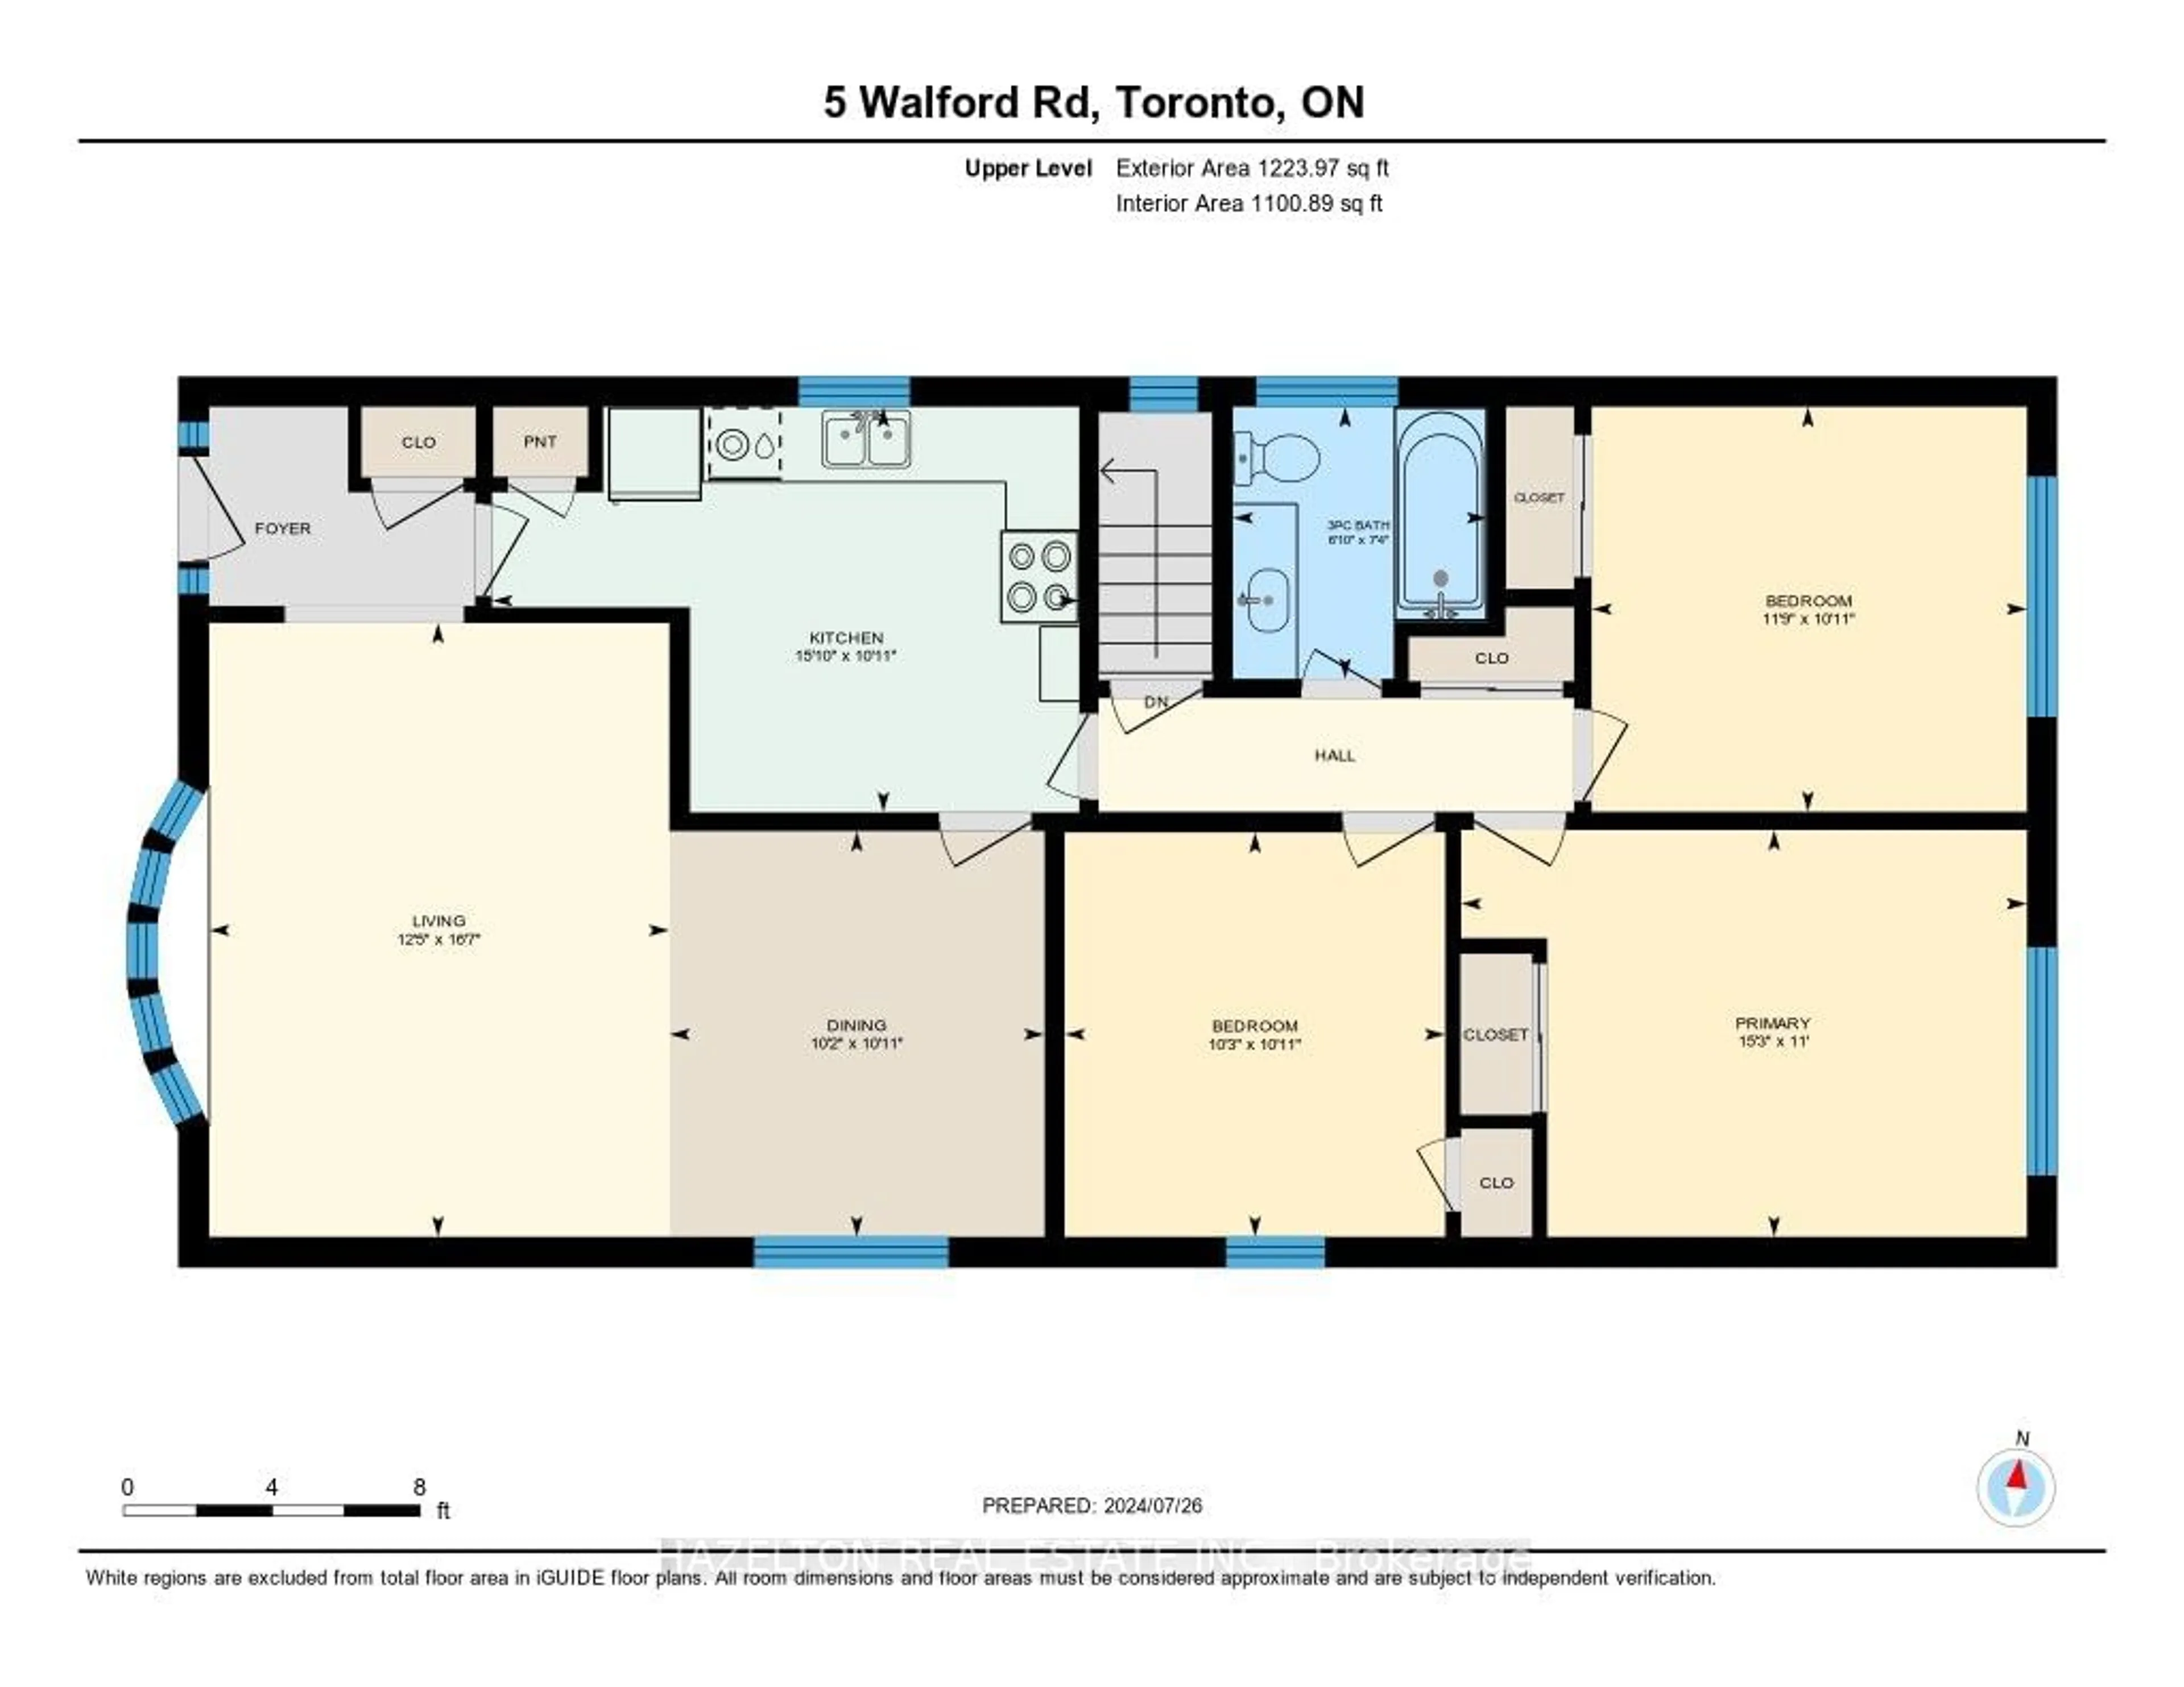 Floor plan for 5 Walford Rd, Toronto Ontario M8X 2N9